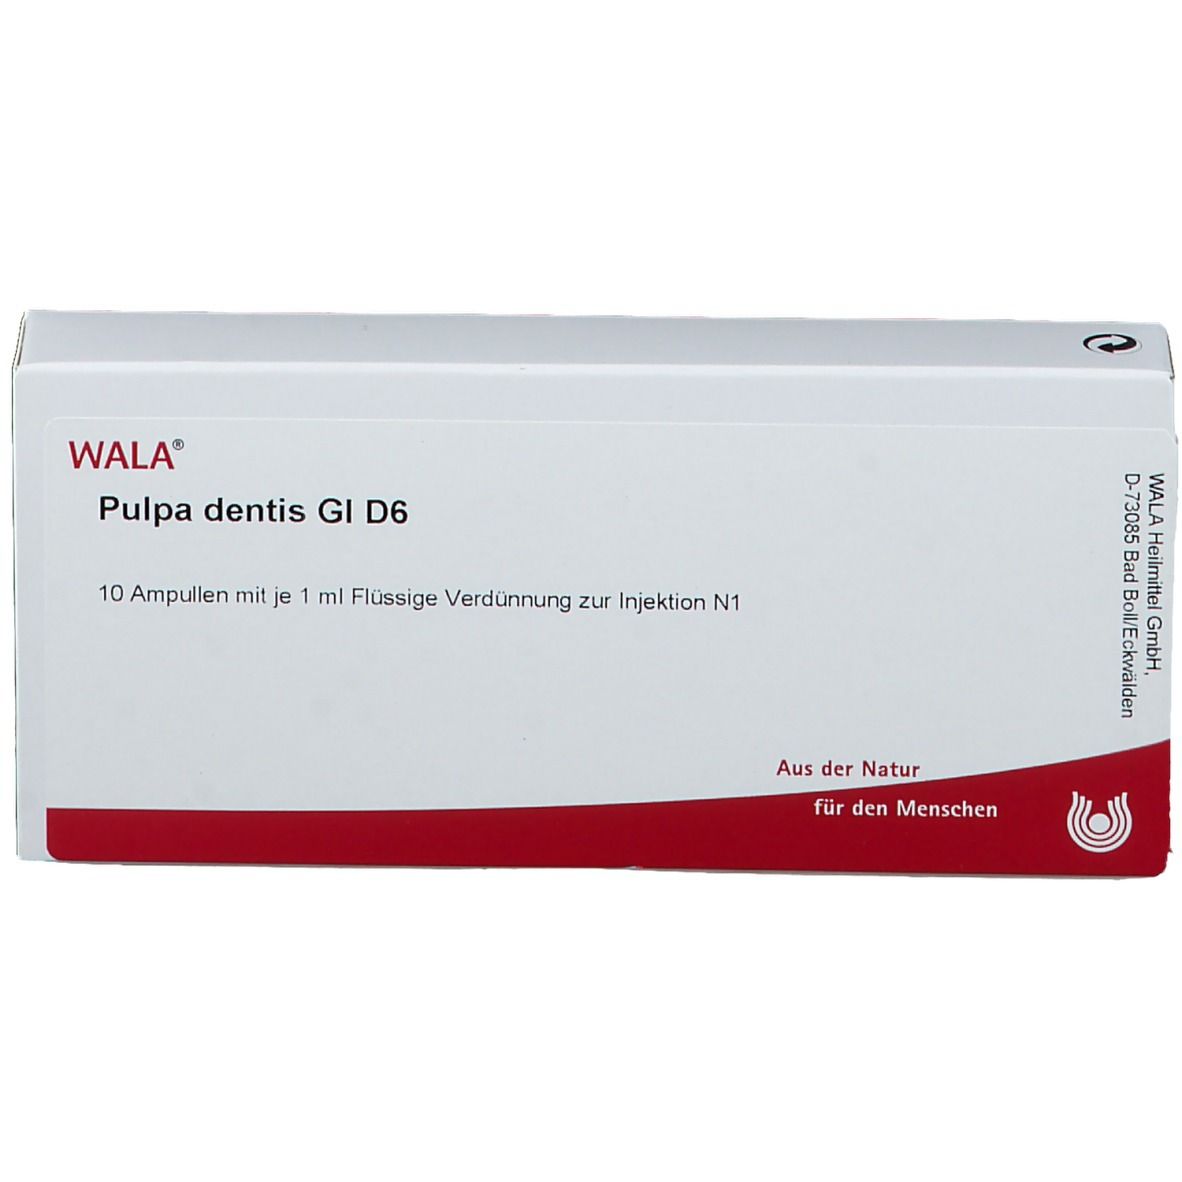 Wala® Pulpa dentis Gl D 6